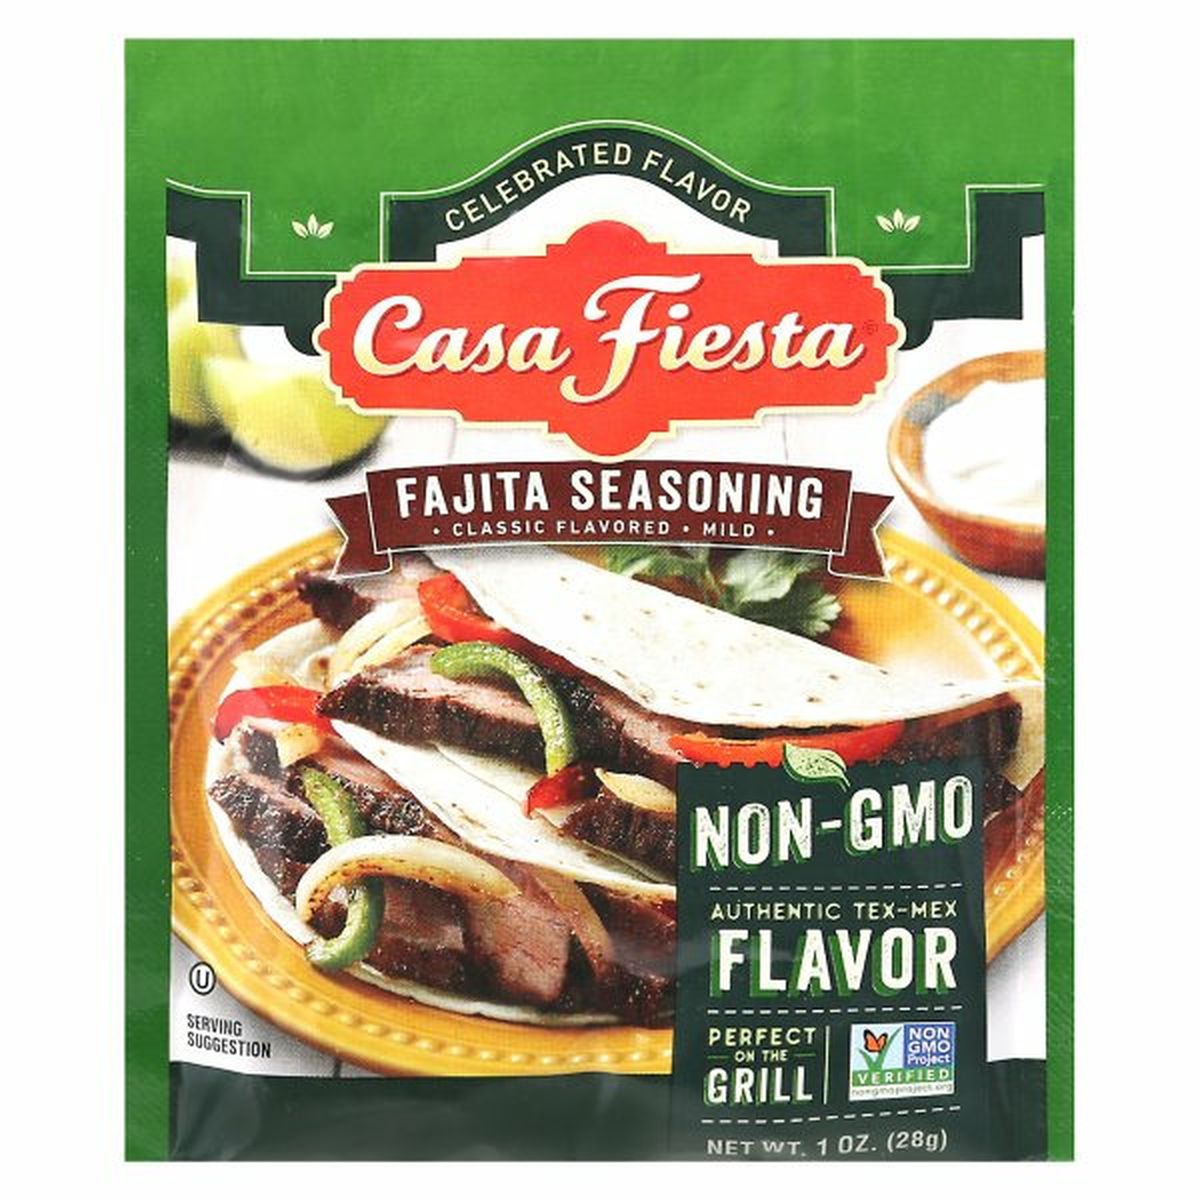 Calories in Casa Fiesta Fajita Seasoning, Classic Flavored, Mild